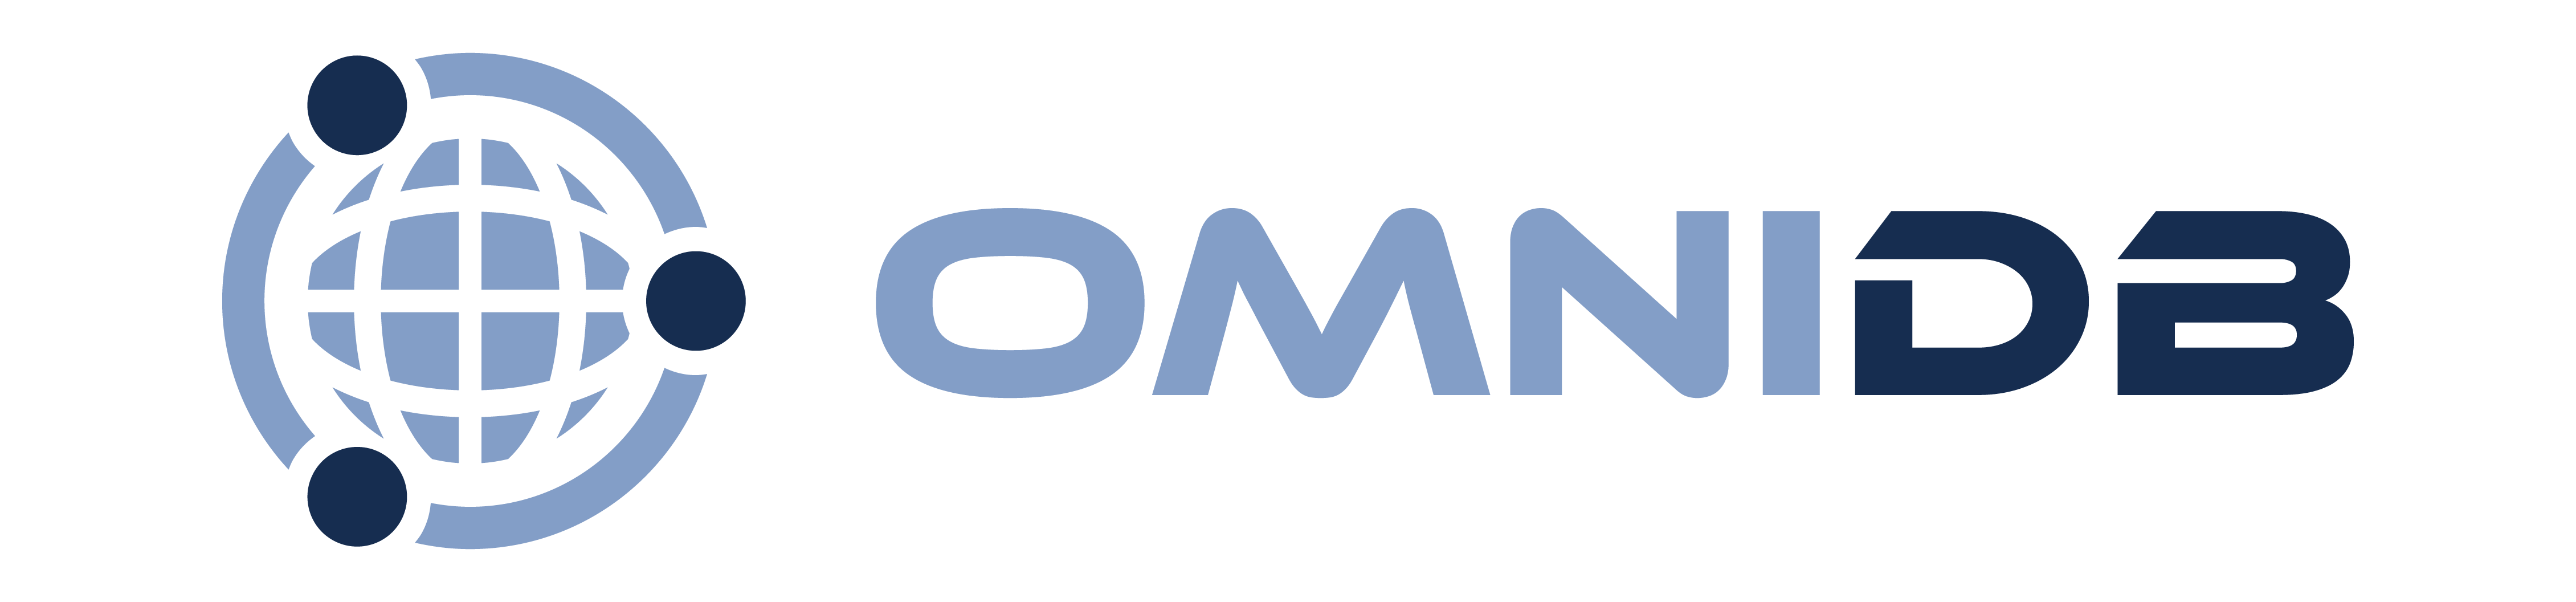 dasdasd.png - GOautodial Open Source Omni-channel Contact Center